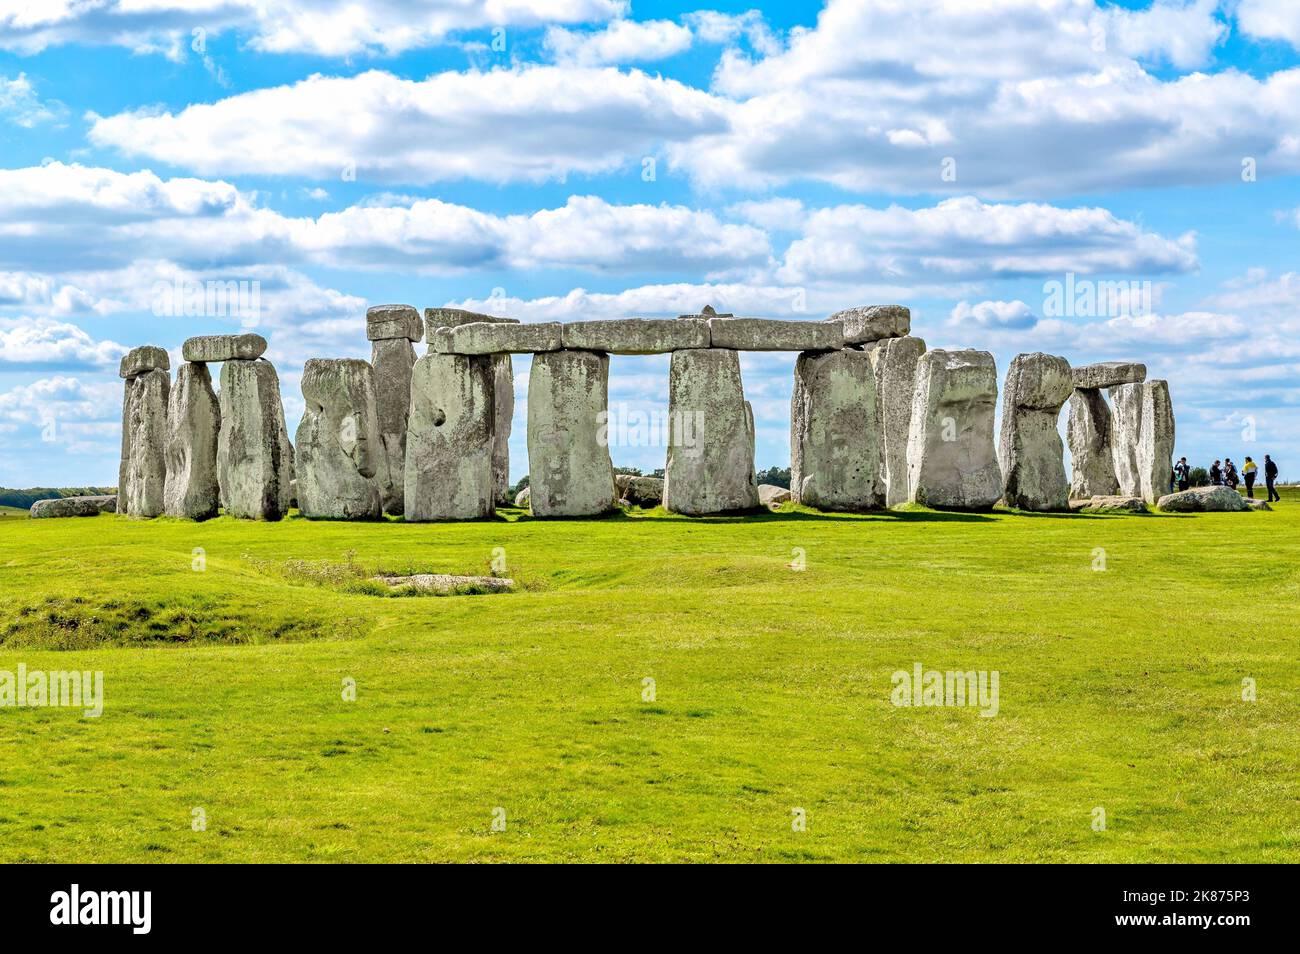 Stonehenge Prehistoric Monument, UNESCO World Heritage Site, near Amesbury, Wiltshire, England, United Kingdom, Europe Stock Photo